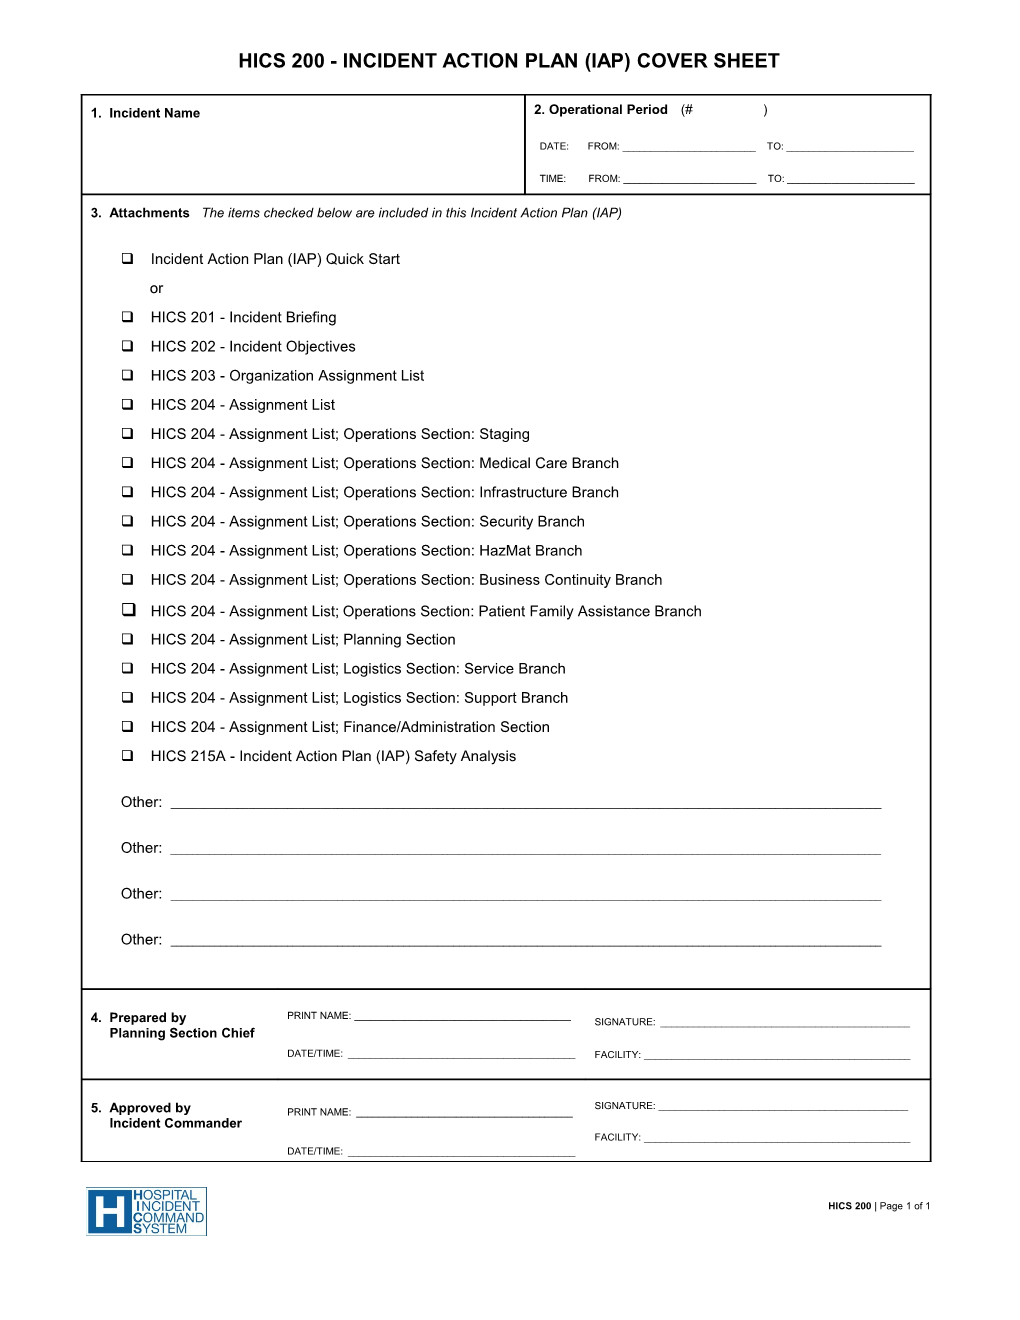 HICS 200-Incident Action Plan (IAP) Cover Sheet